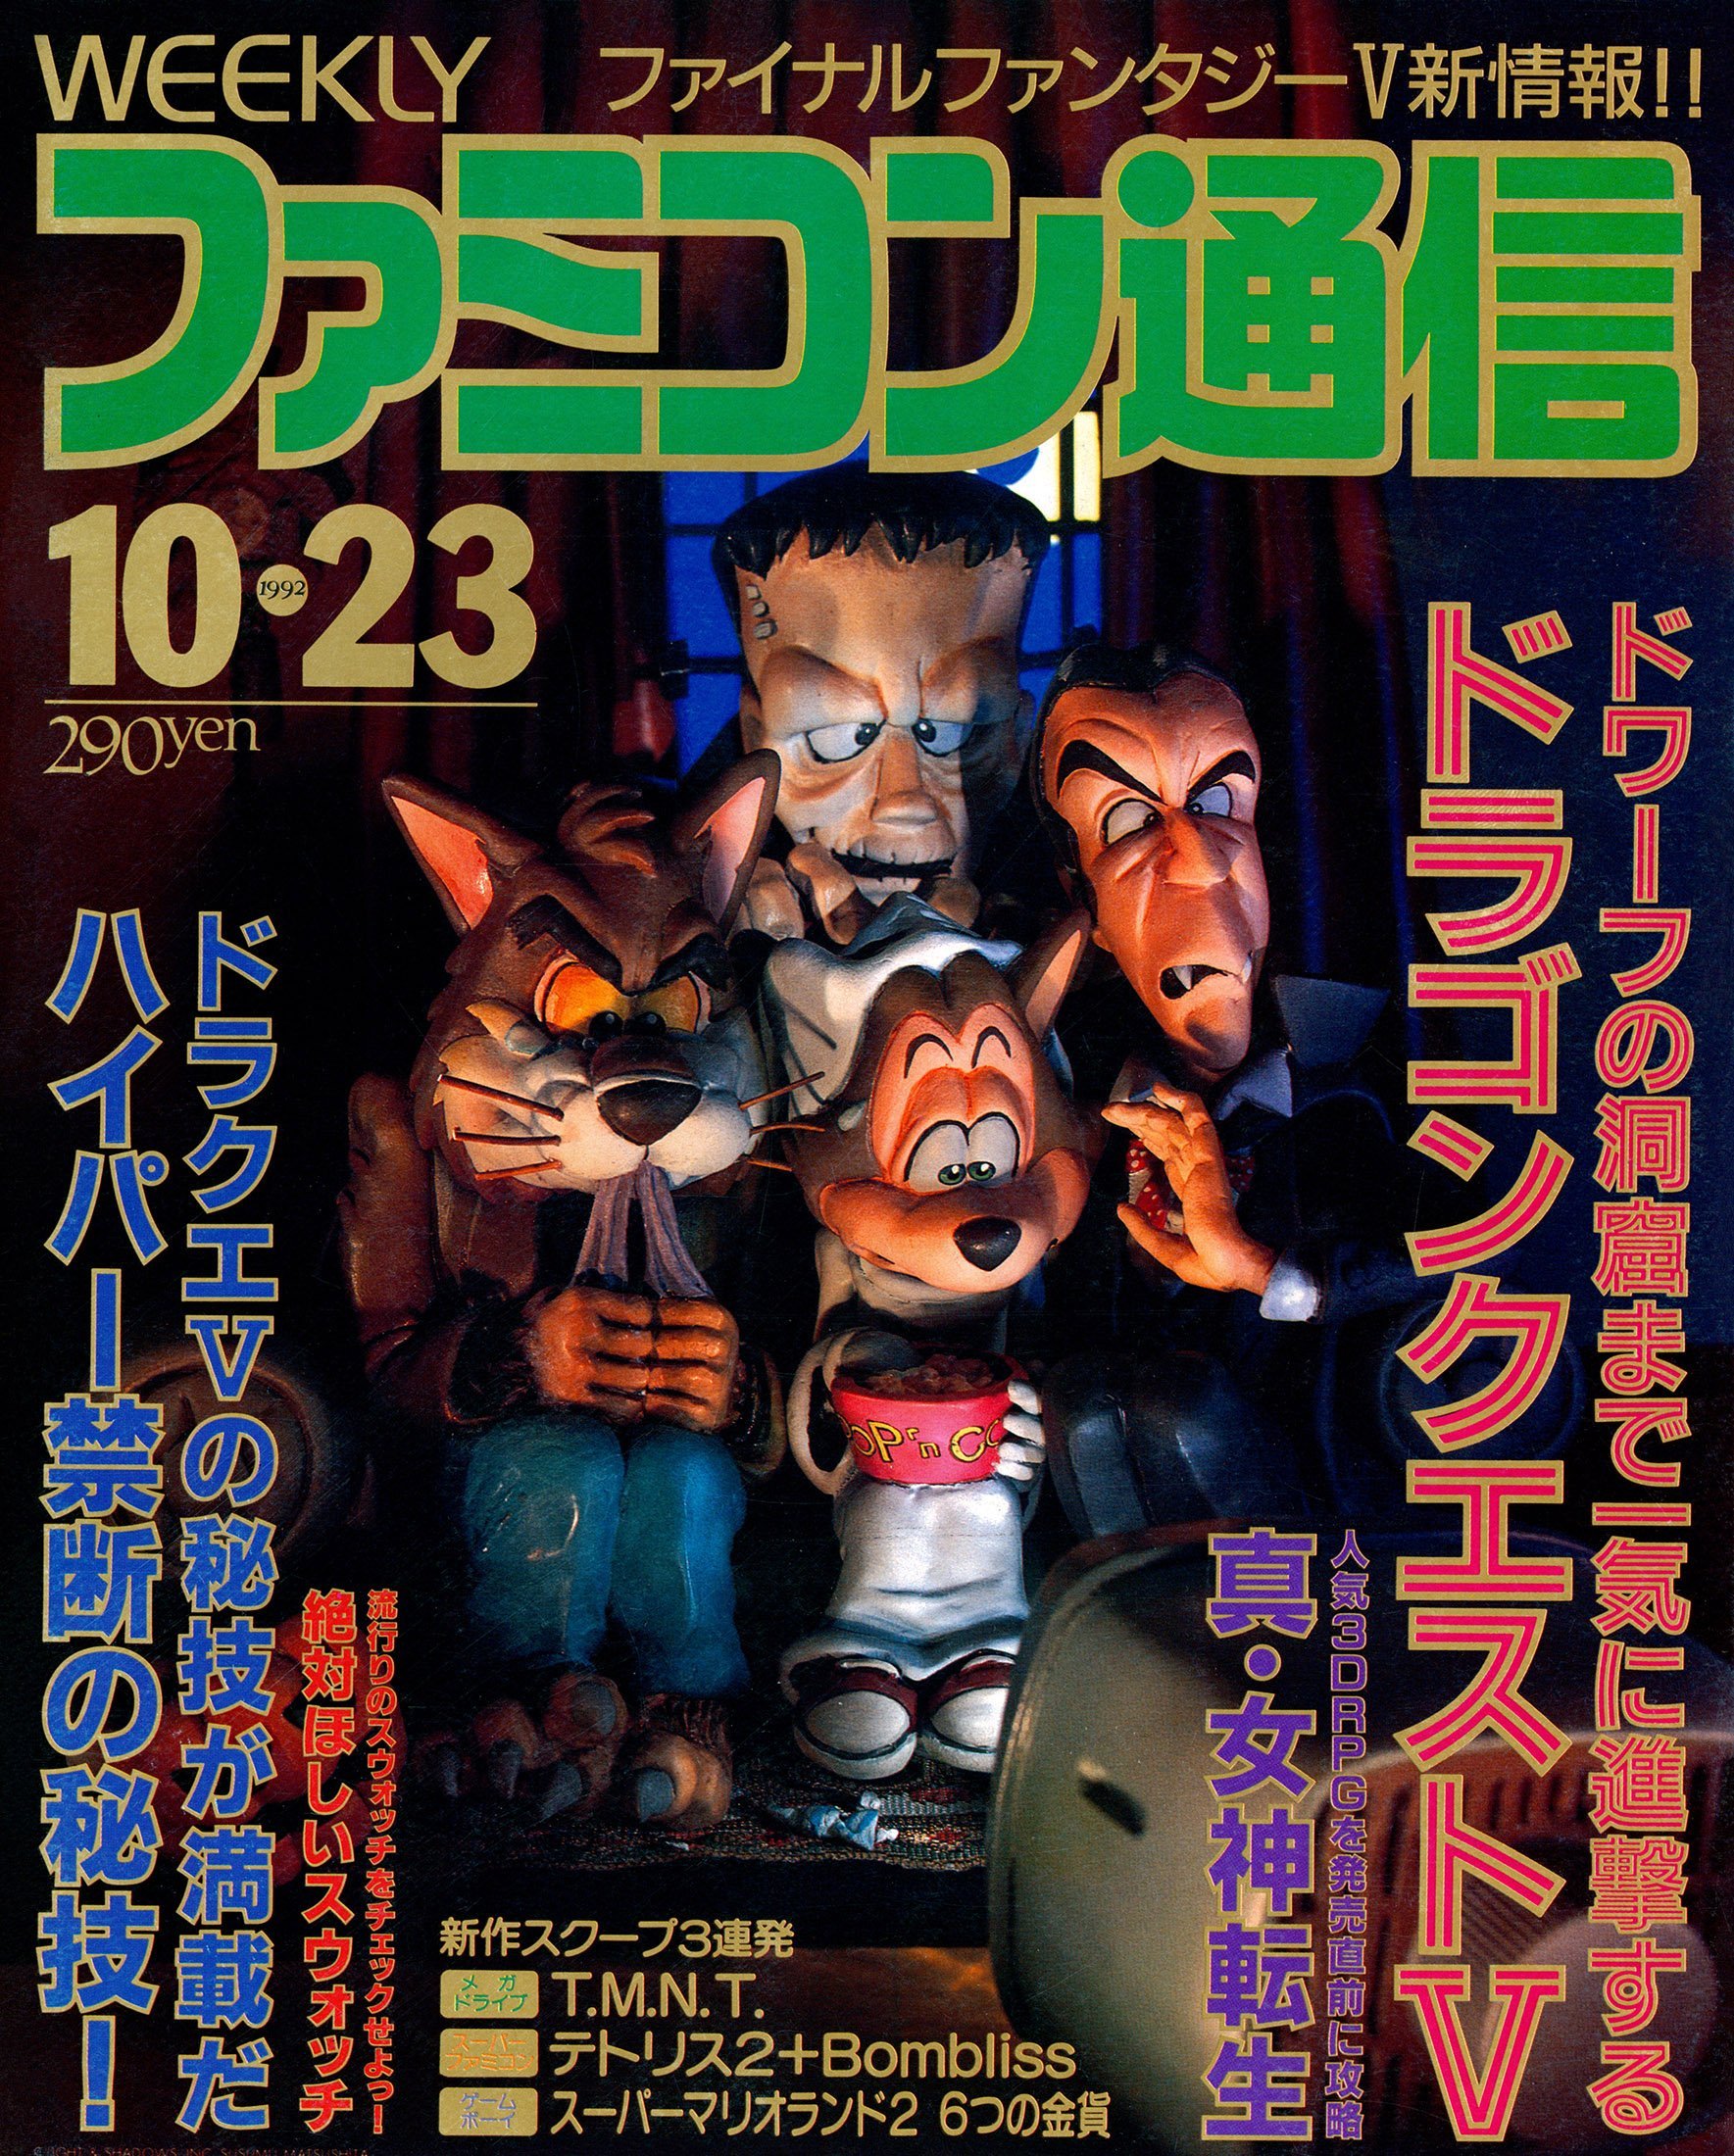 Famitsu 0201 (October 23, 1992)